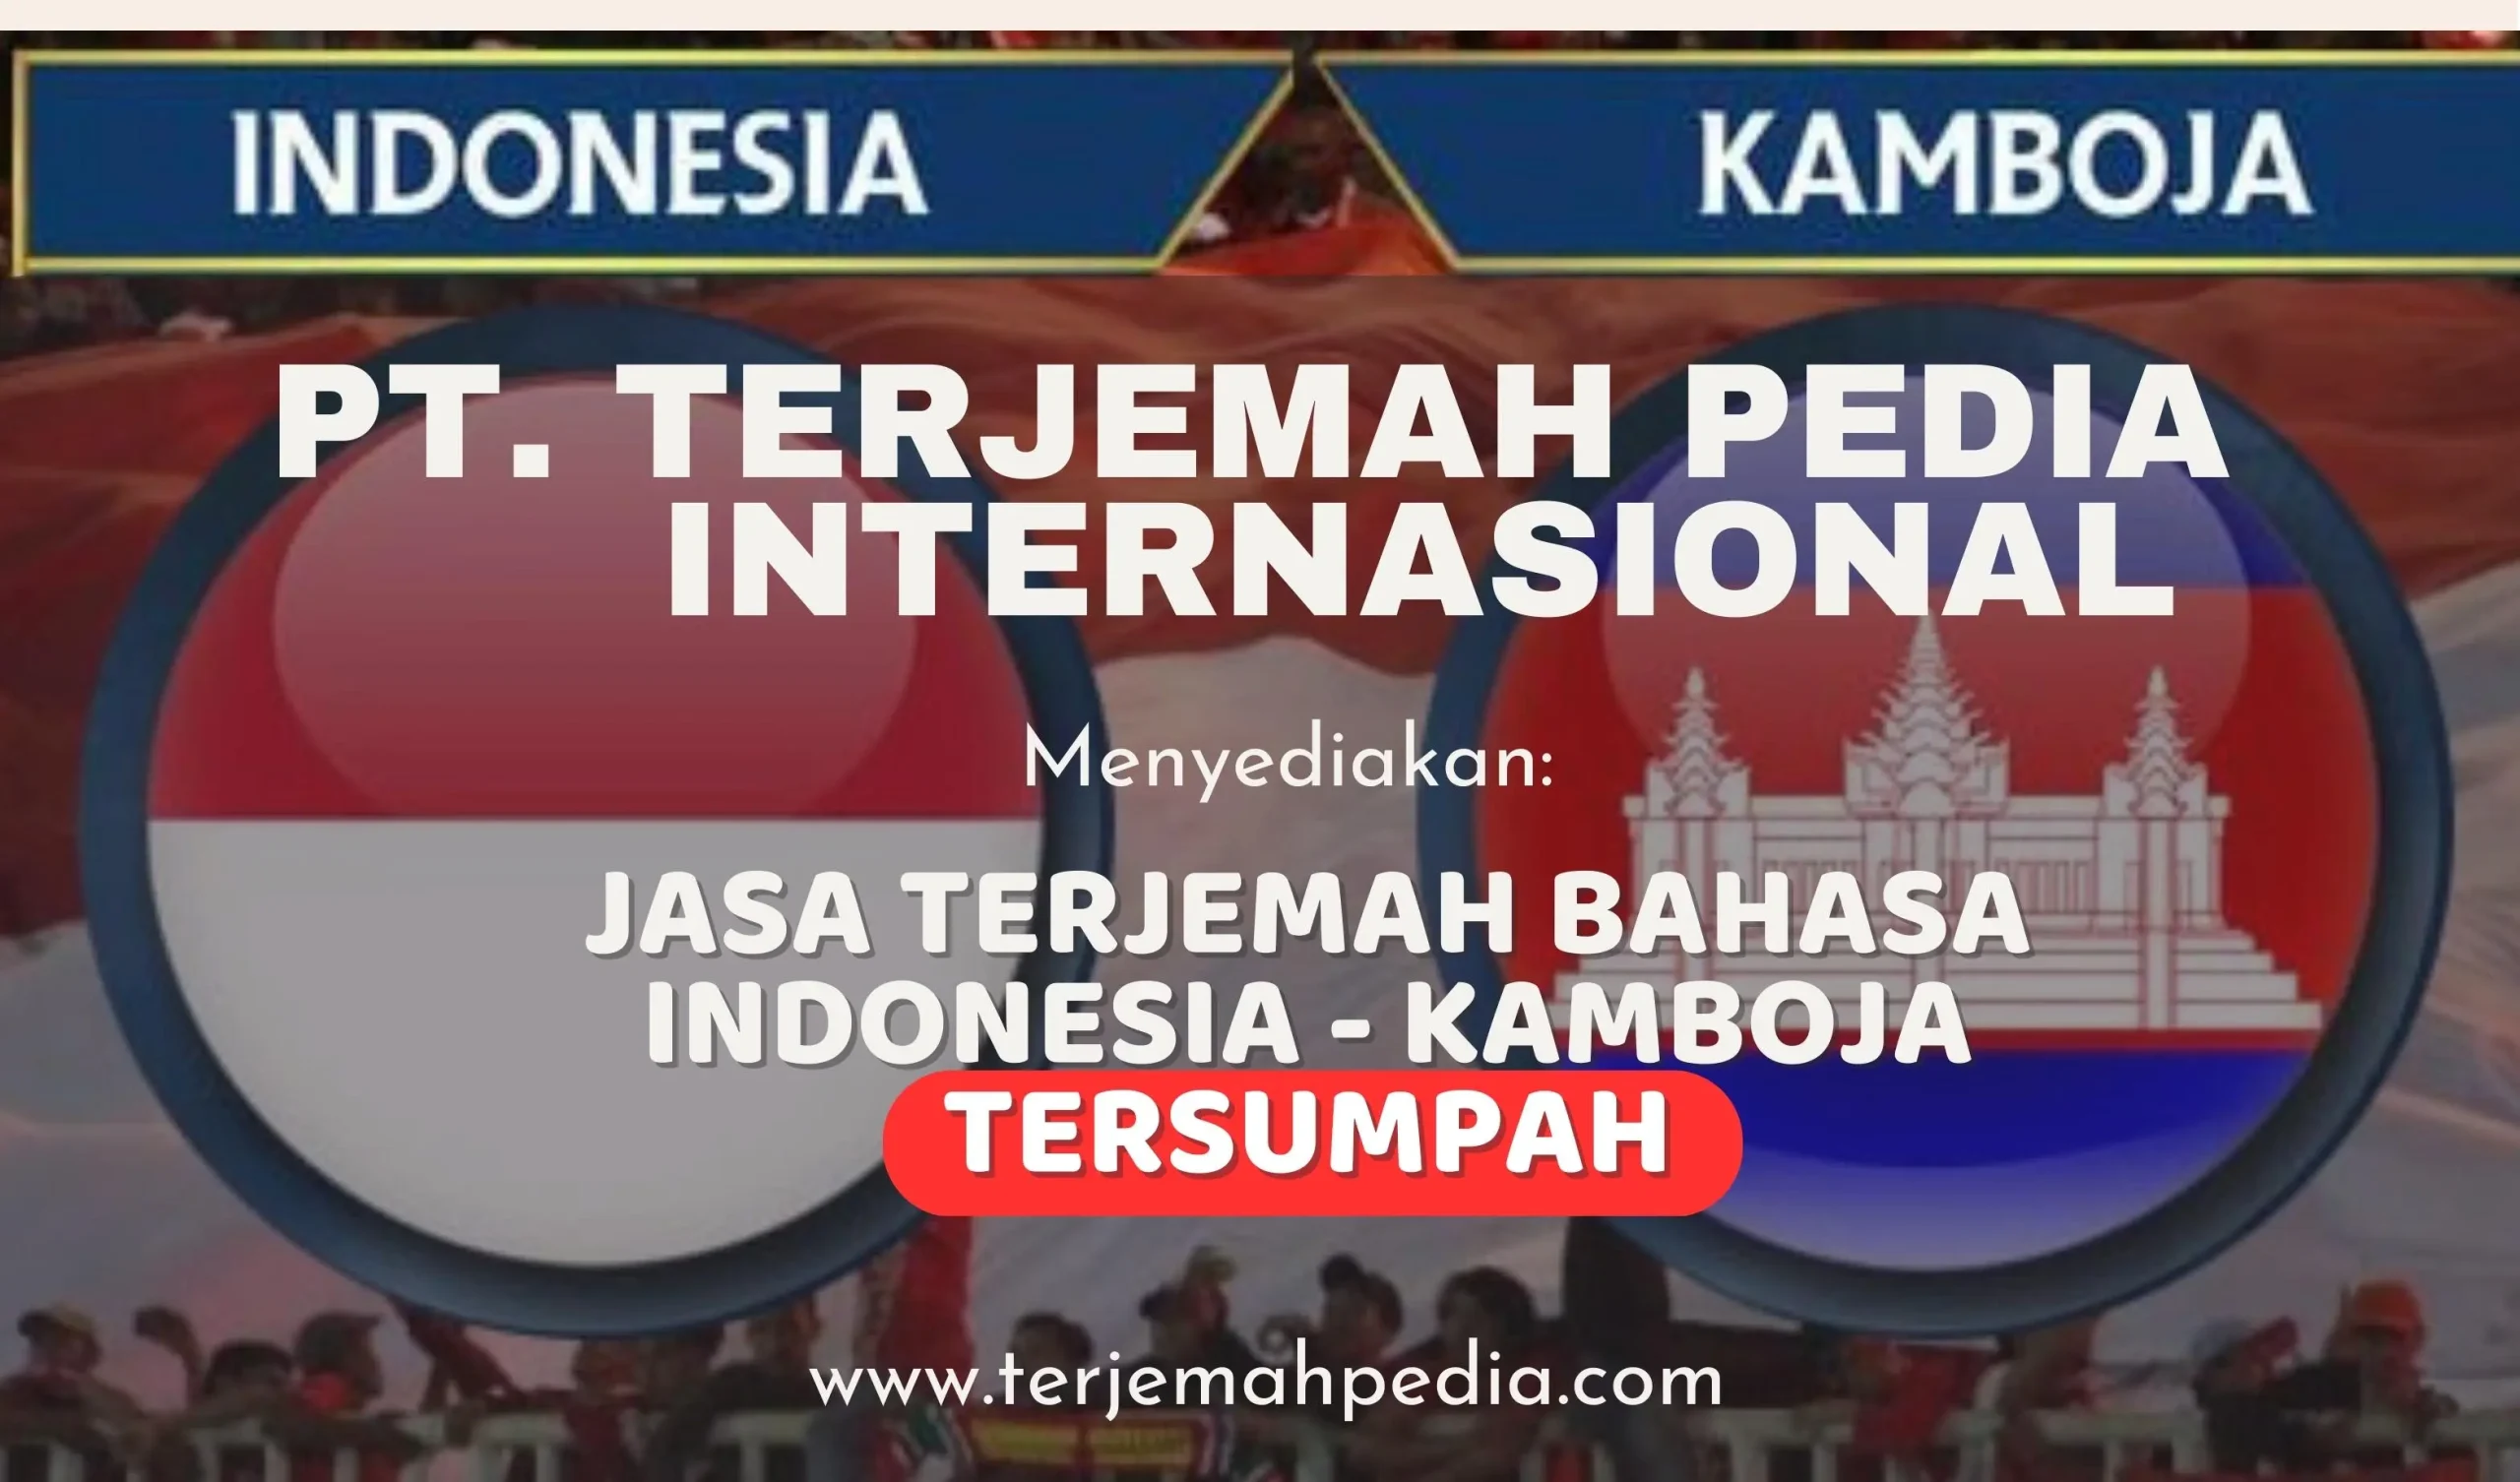 JASA TERJEMAH BAHASA INDONESIA – KAMBOJA TERSUMPAH